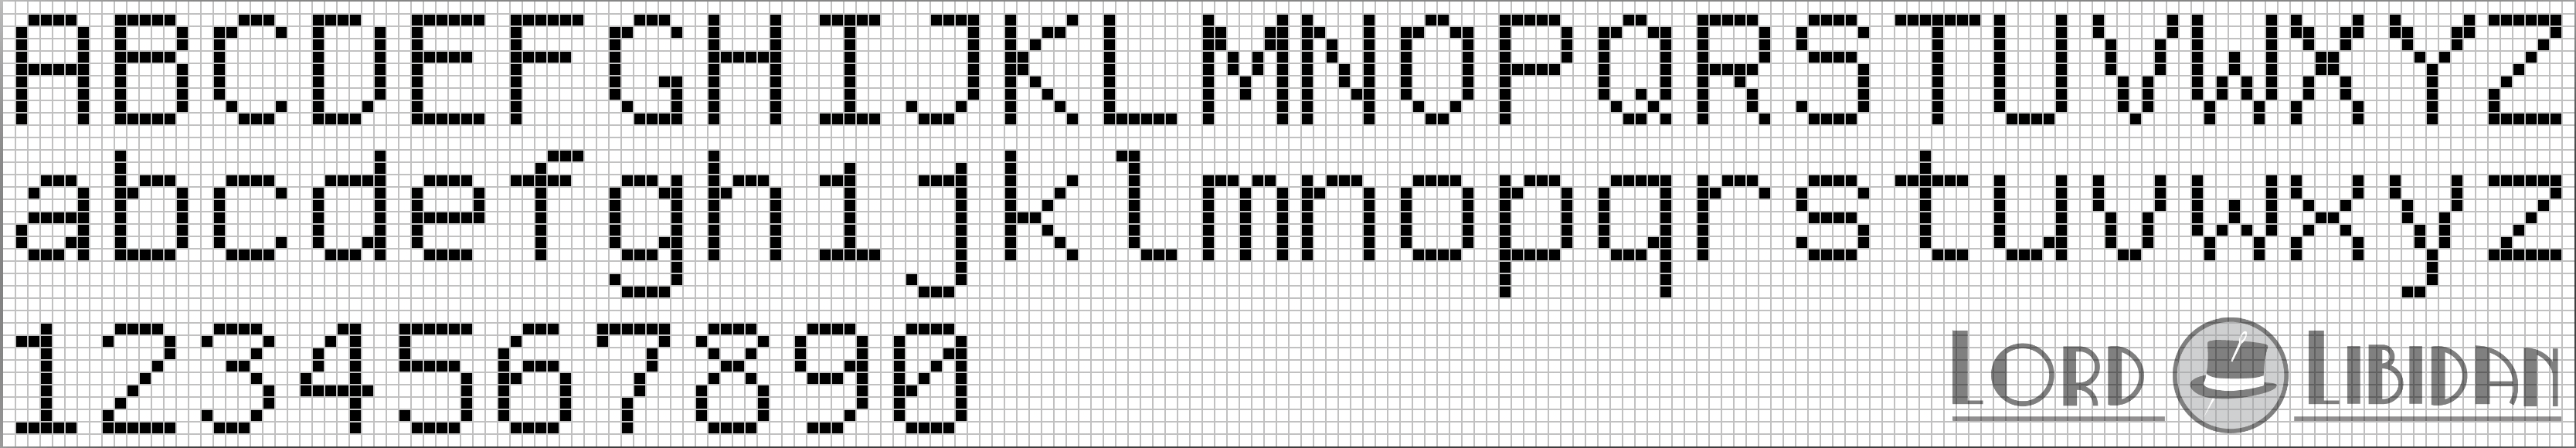 Tall Sans Serif Cross Stitch Alphabet Pattern Free Download by Lord Libidan